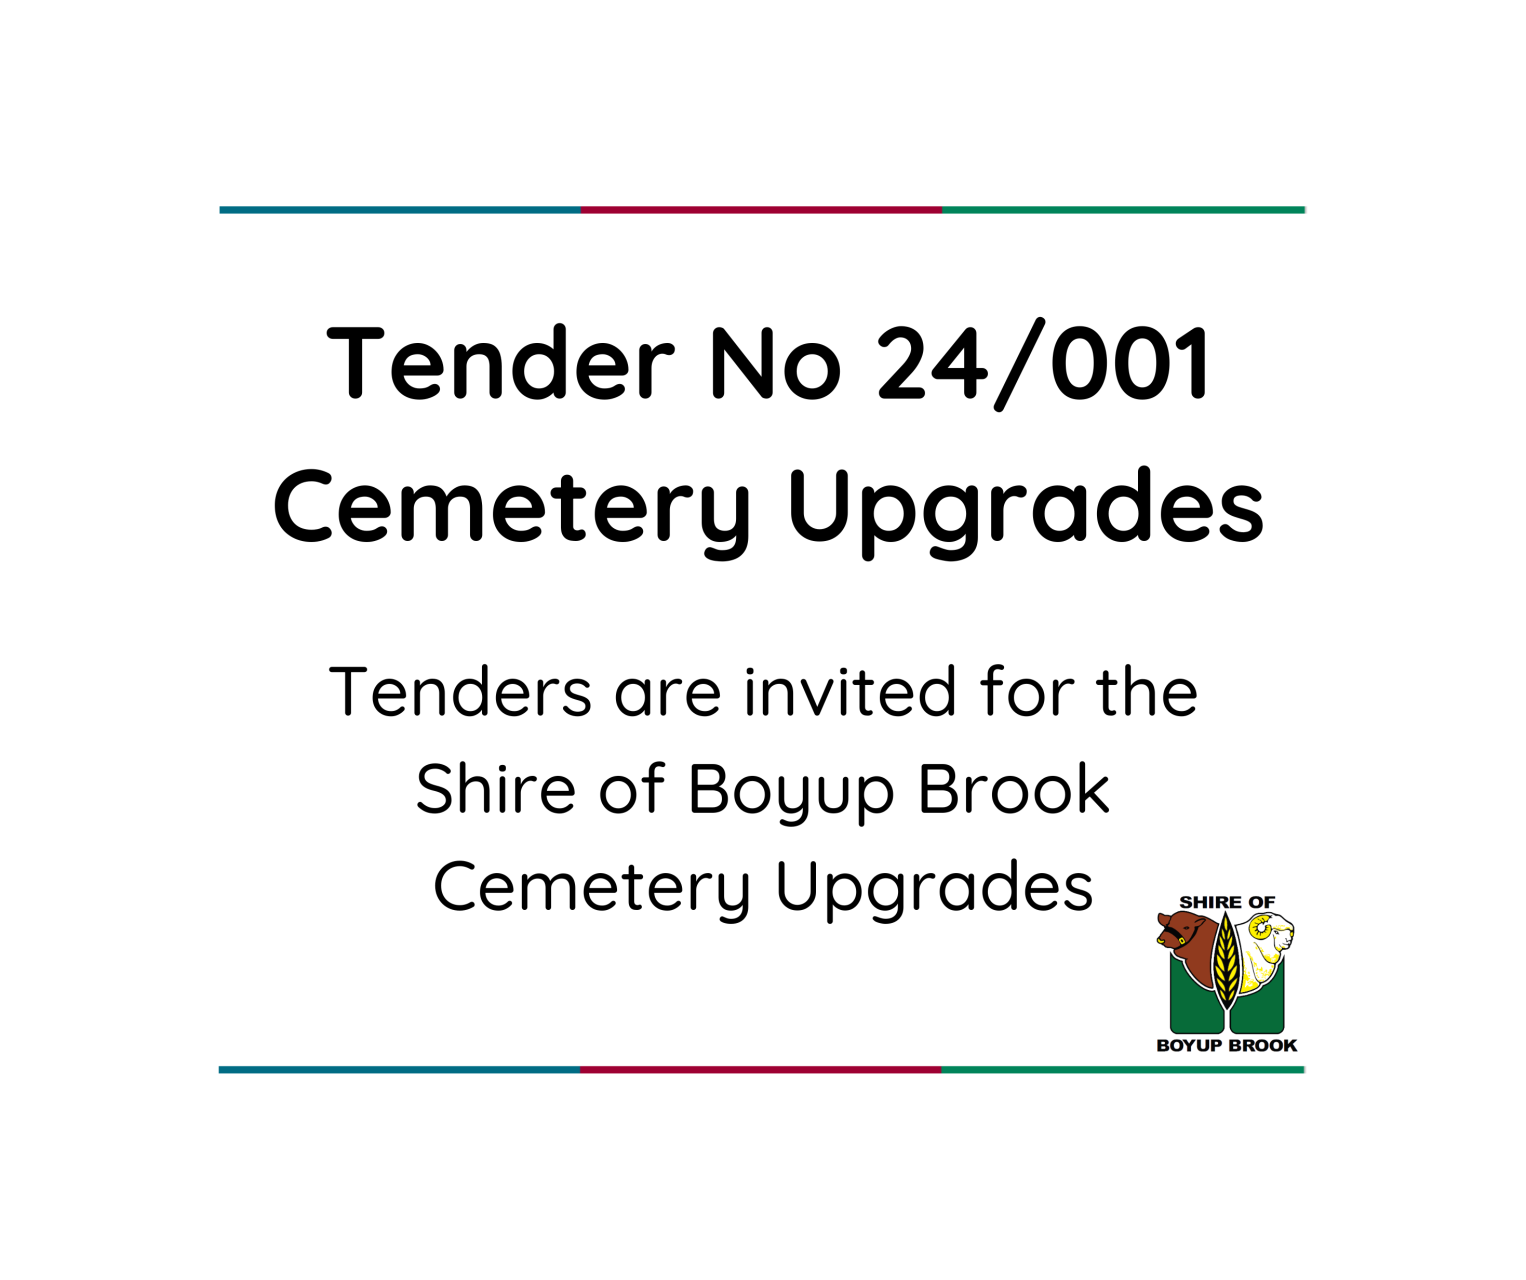 Tender 24/001 - Cemetery Upgrades